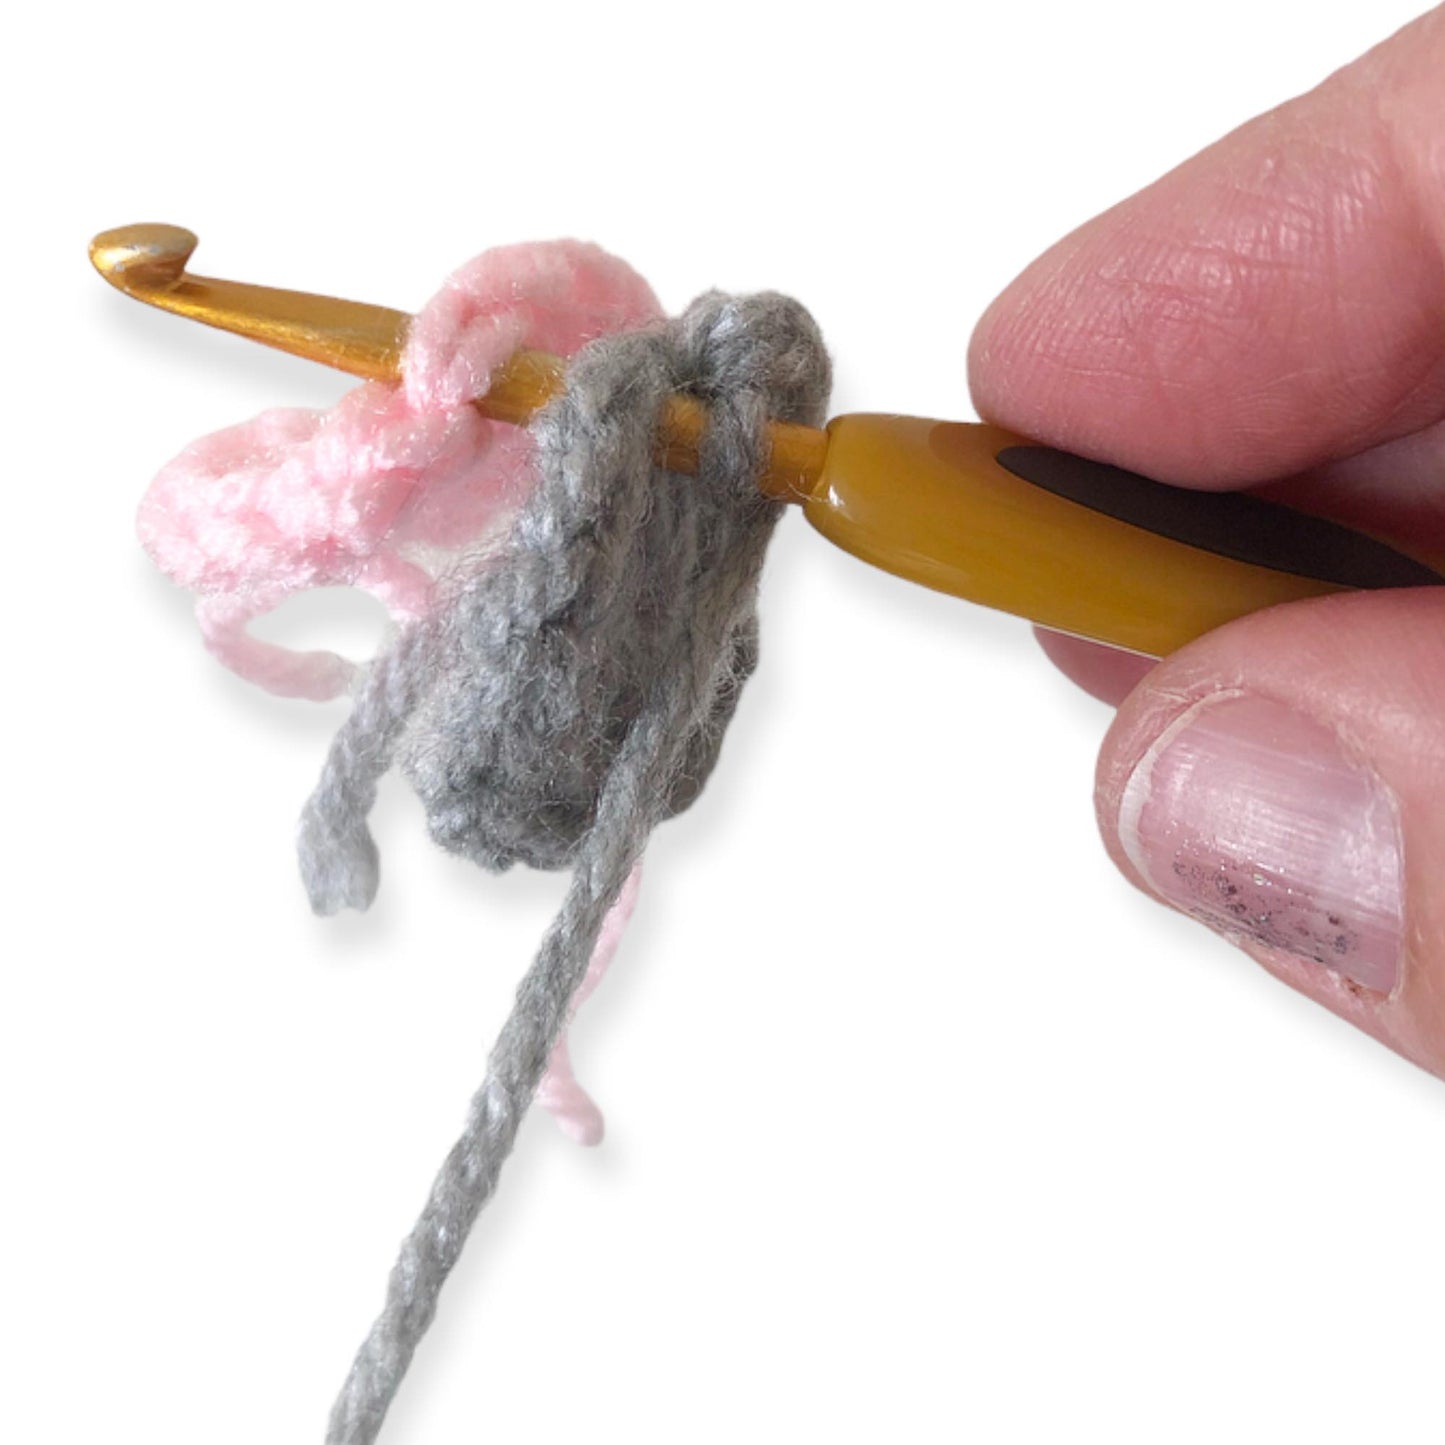 PATTERN: Crochet Mouse